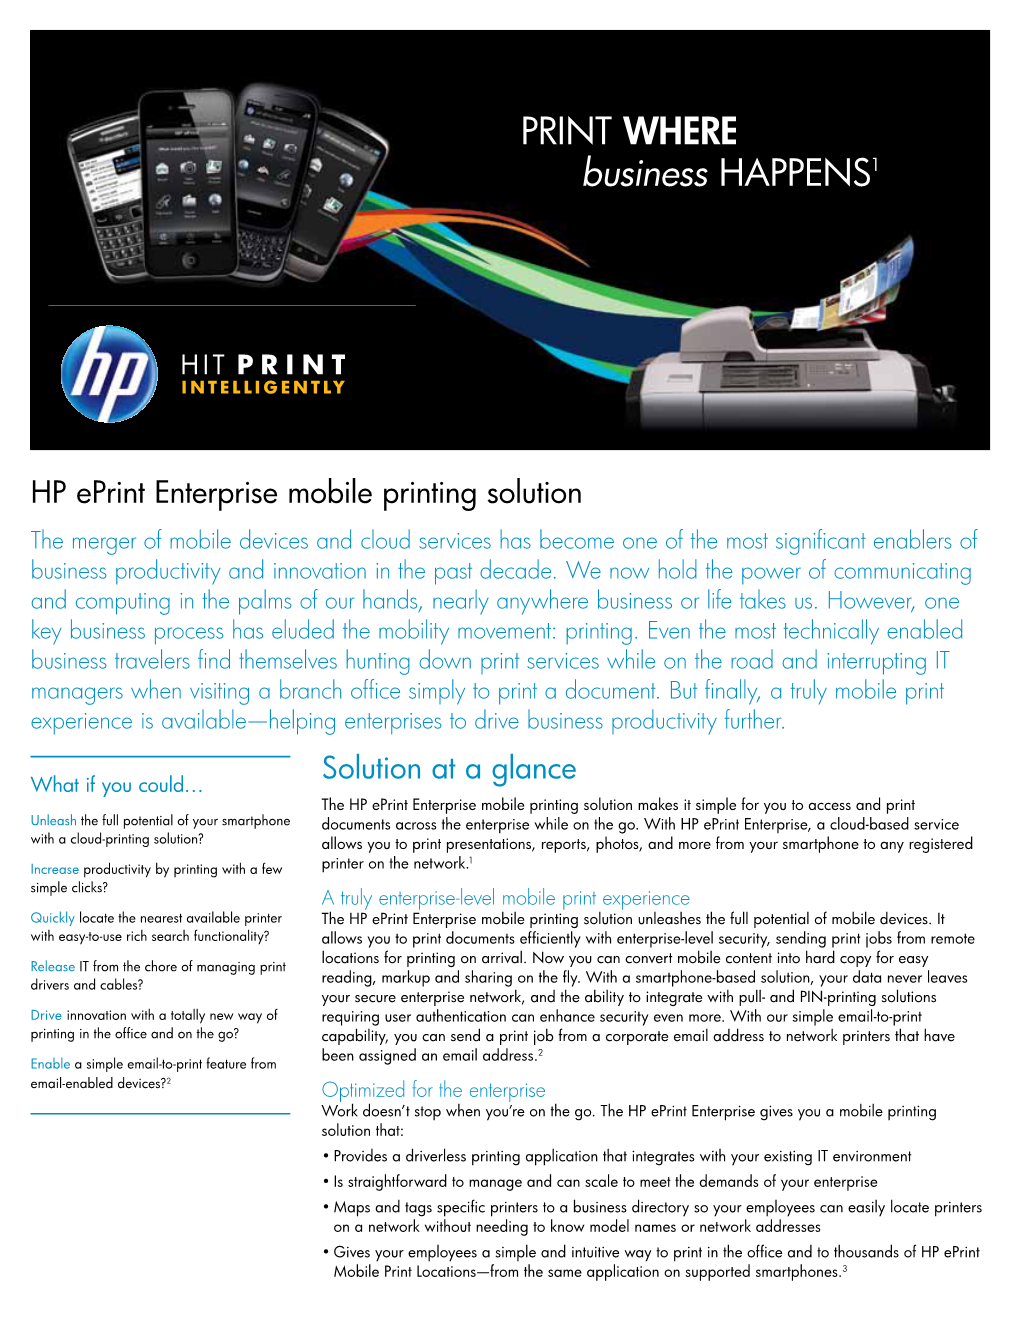 HP Eprint Enterprise